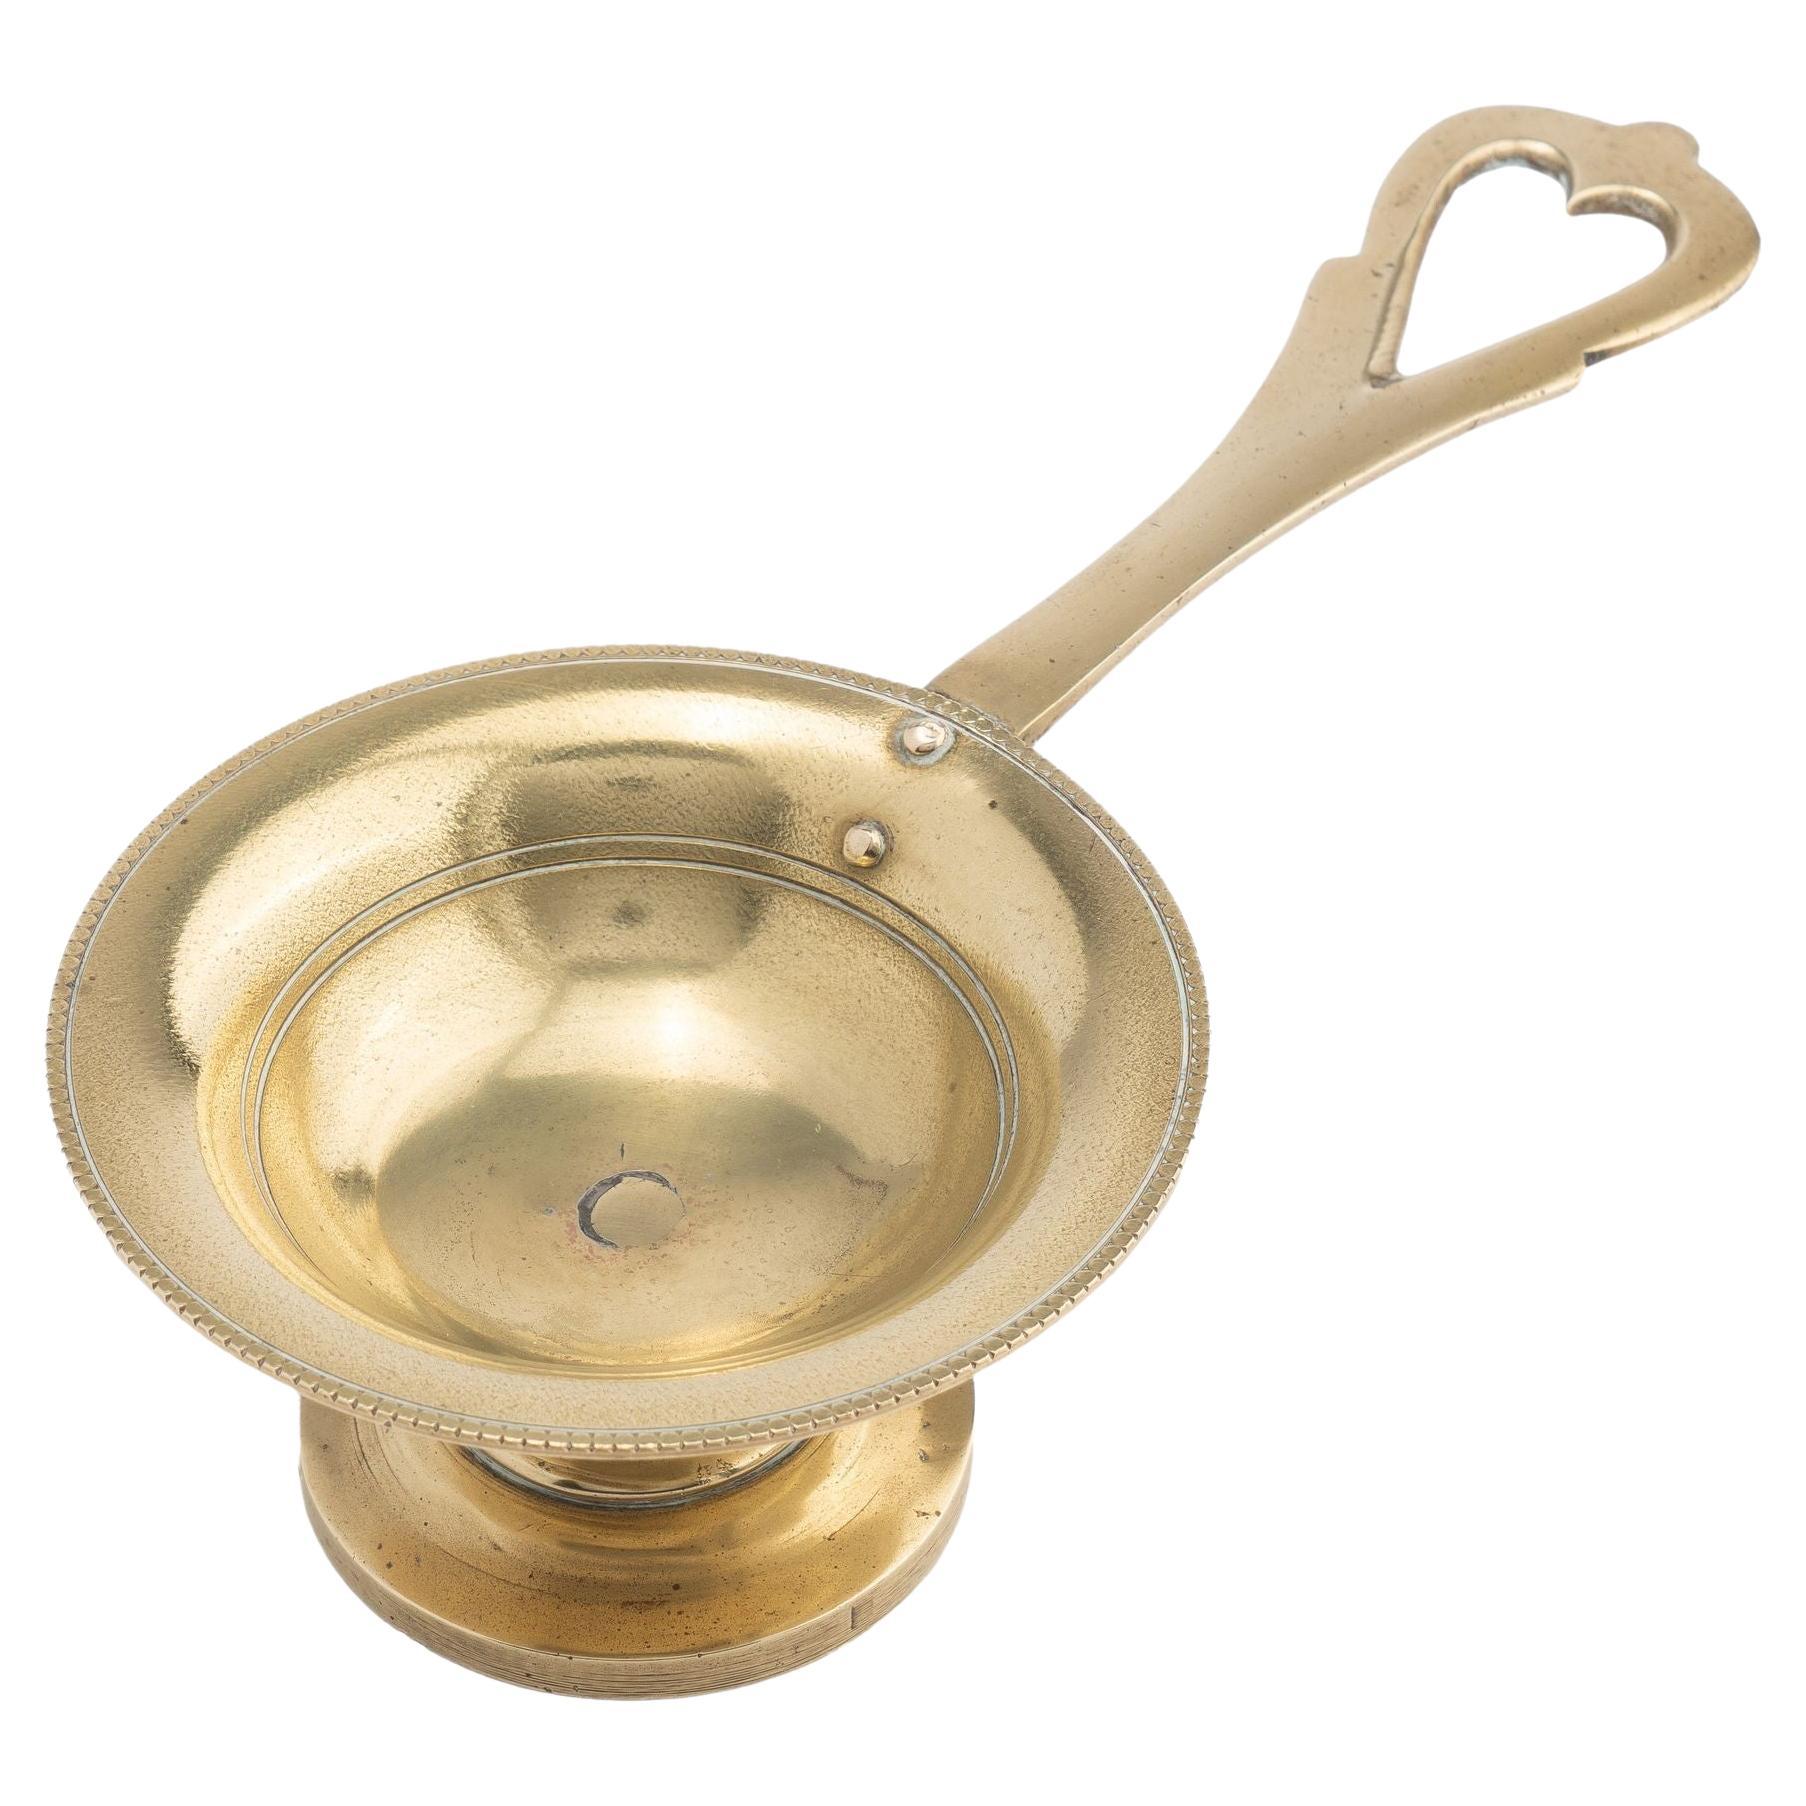 English cast brass taster dish with pedestal base, 1775-1800